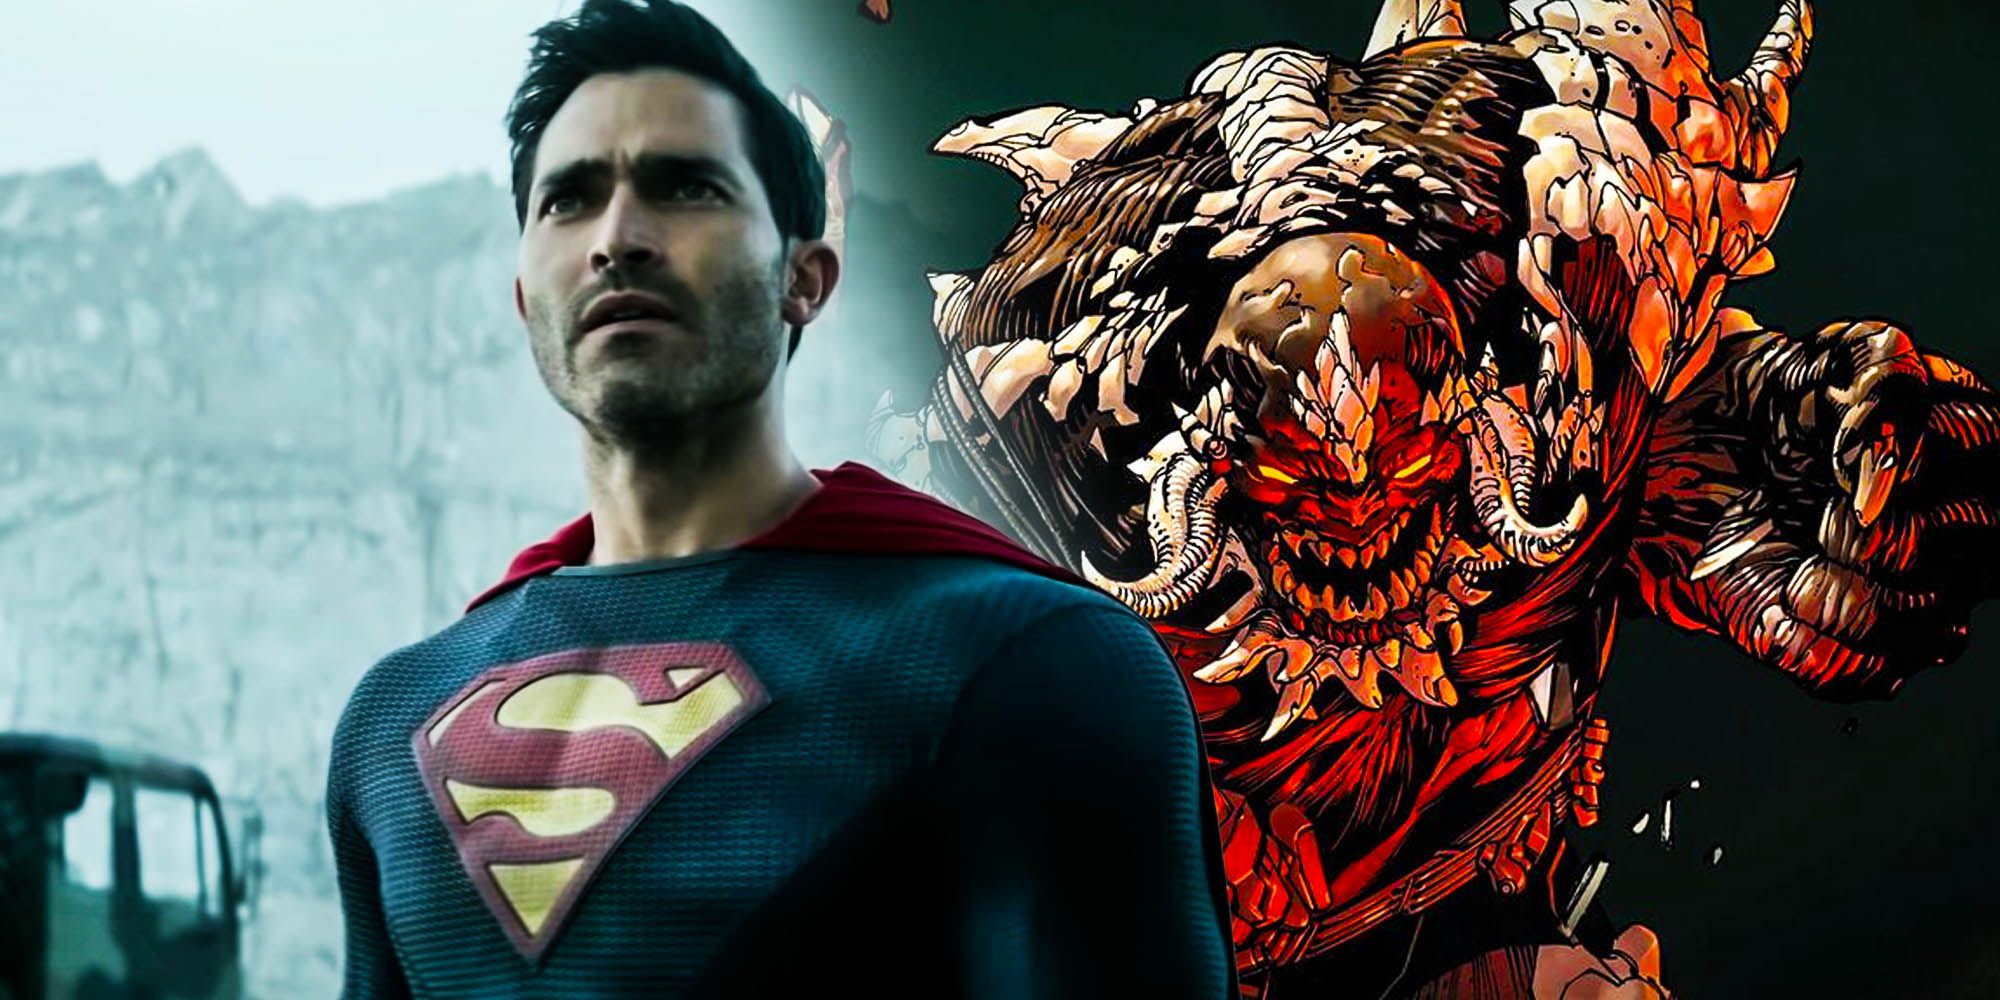 Doomsday still the main villain of superman and lois season 2